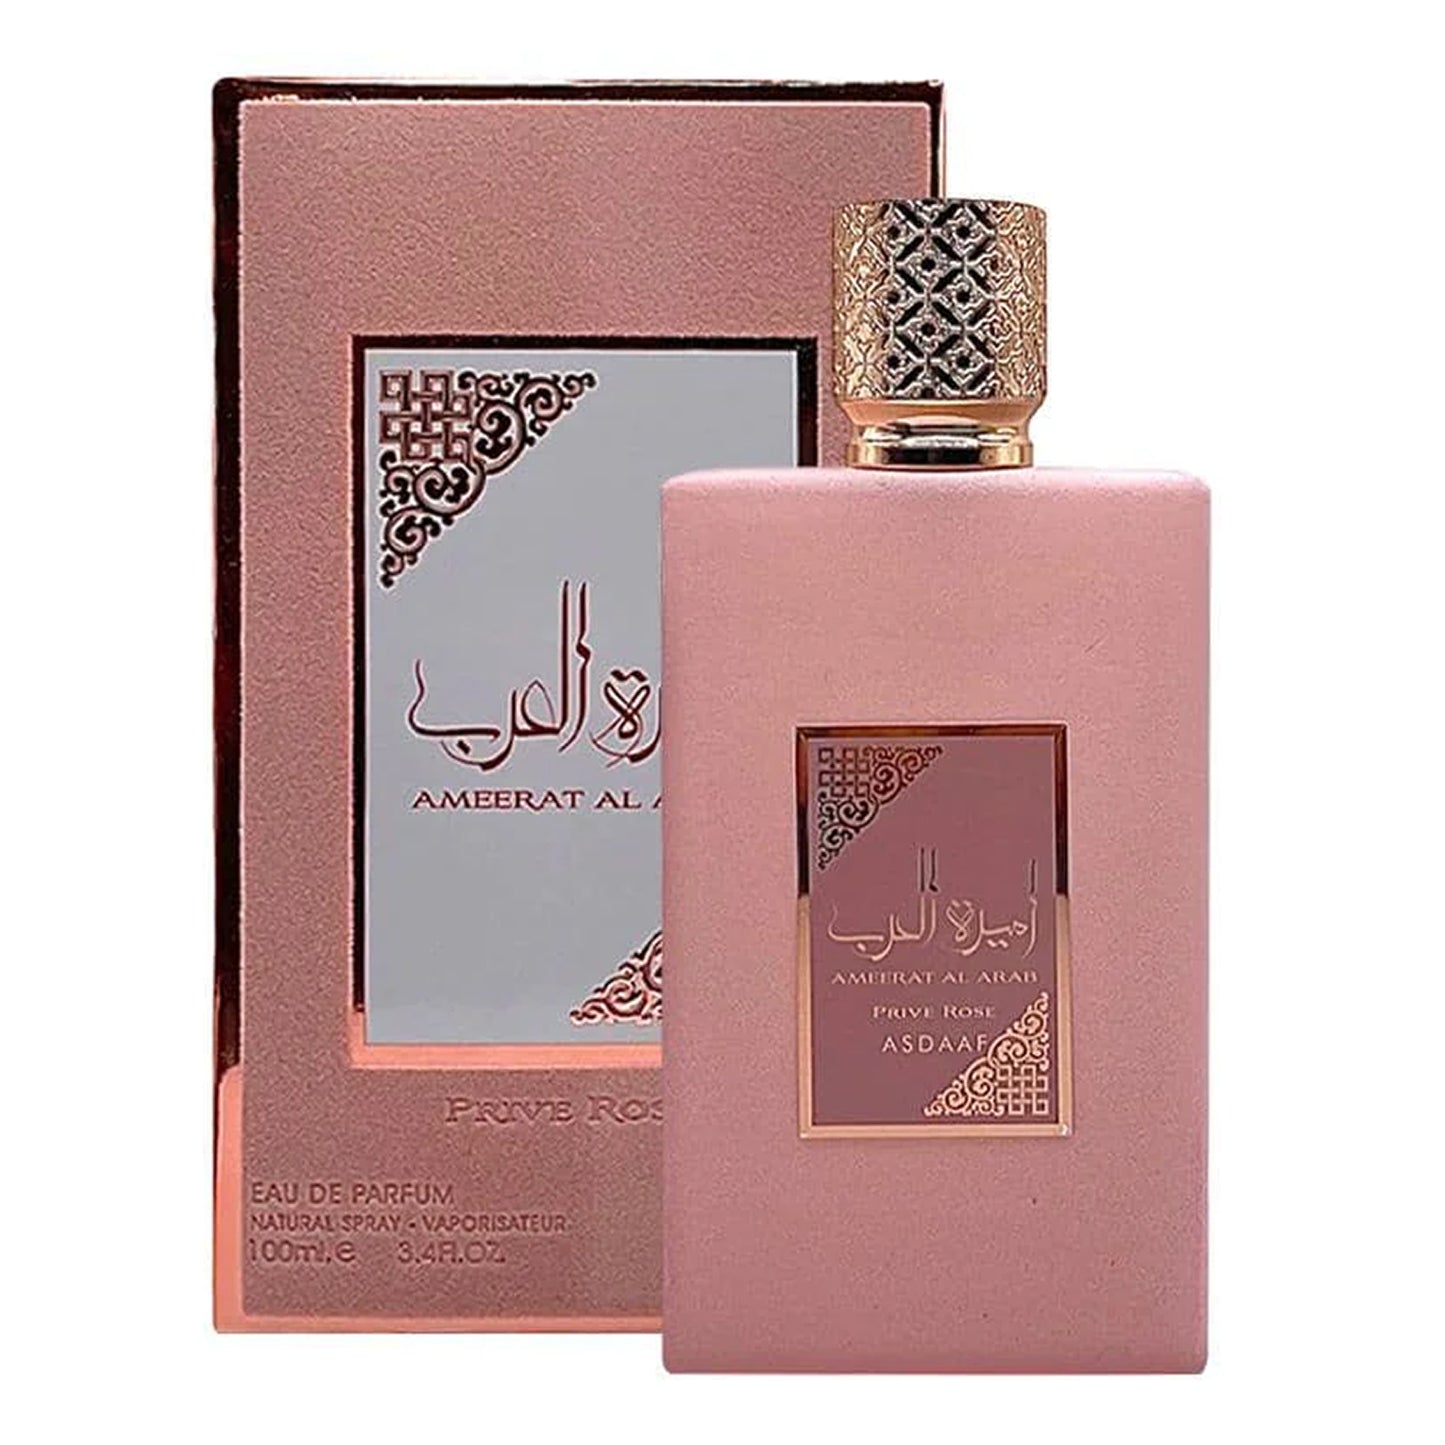 (Pink) Ameerat Al Arab (Princess of Arabia) - Prive Rose - EDP 100ml by Asdaaf - Women